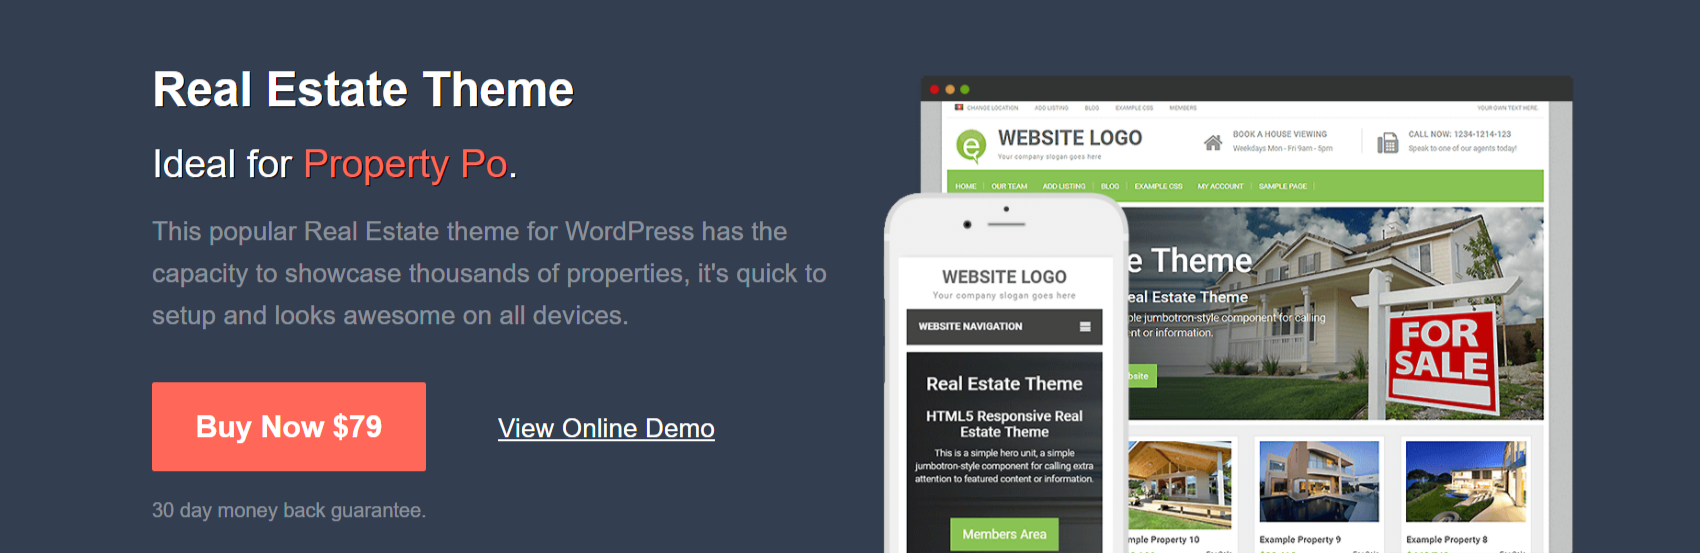 WordPress Real Estate Theme - PremiumPress ReviewWordPress Real Estate Theme - PremiumPress Review